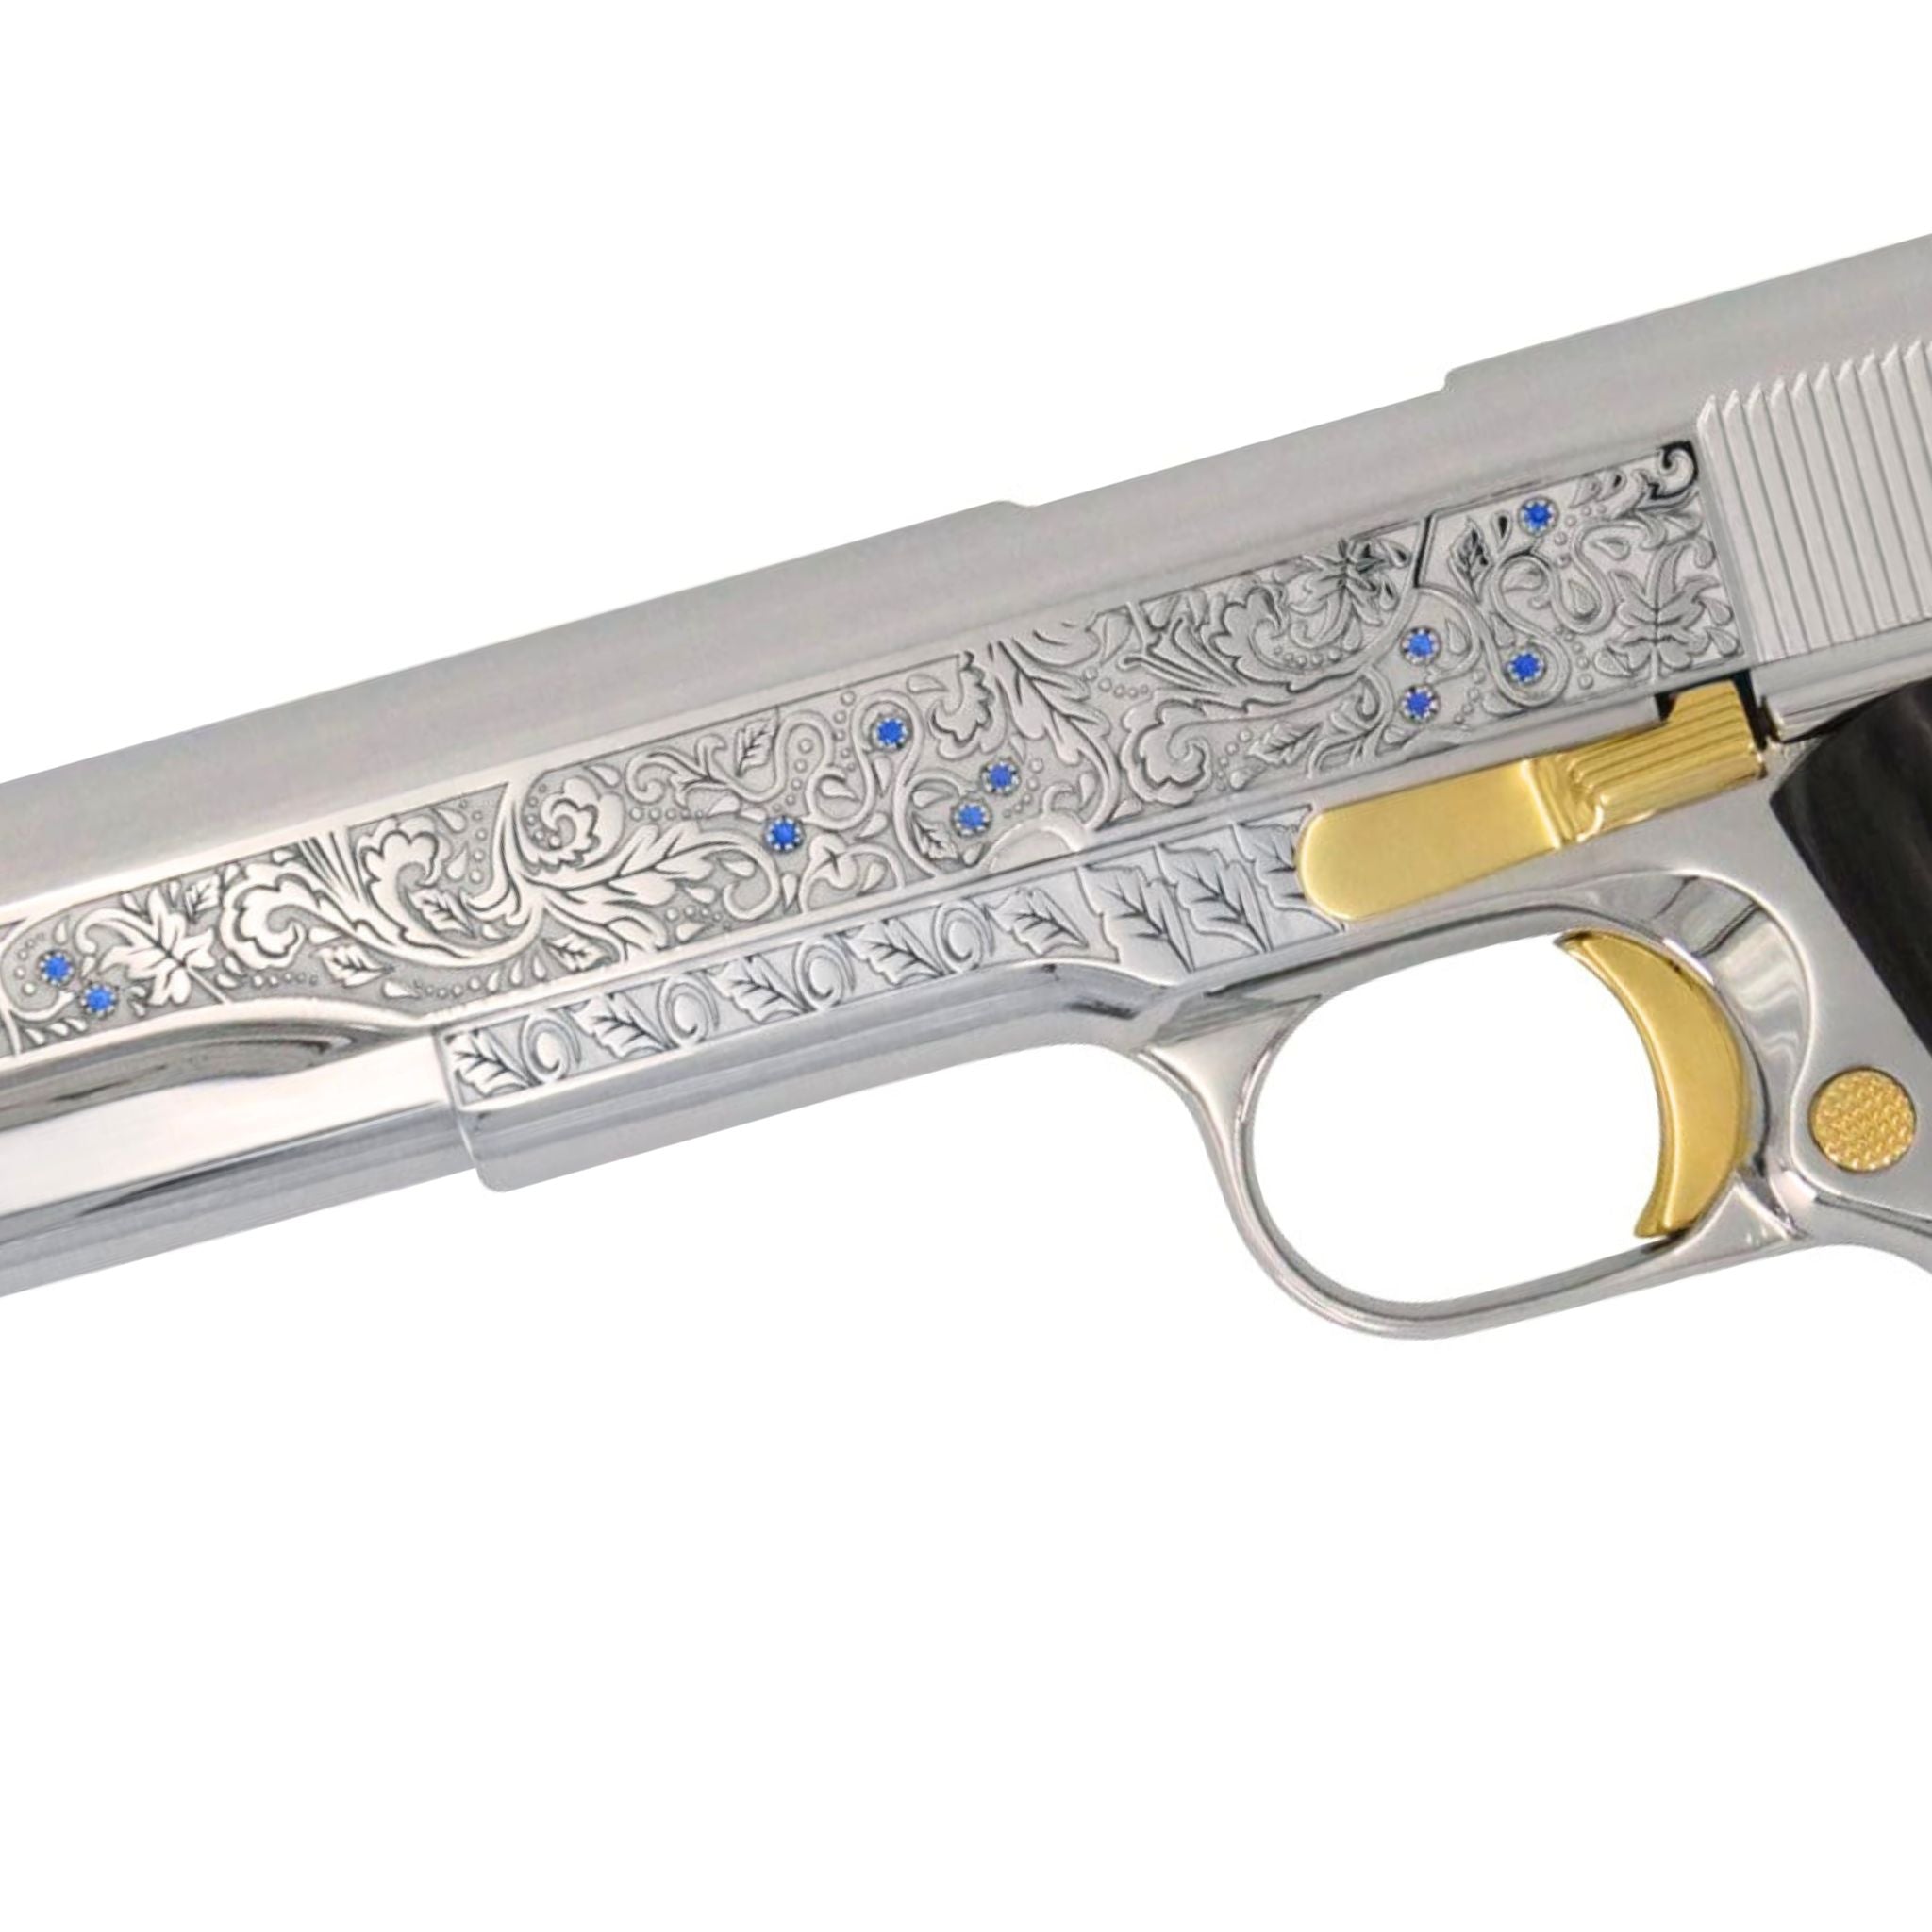 Colt 1911 Government, 38 Super, Vine & Berries Design, White Chrome Finish & 24K Gold Plated Accents, SKU: 4674358476902, 24 karat gold gun, 24 Karat Gold Firearm